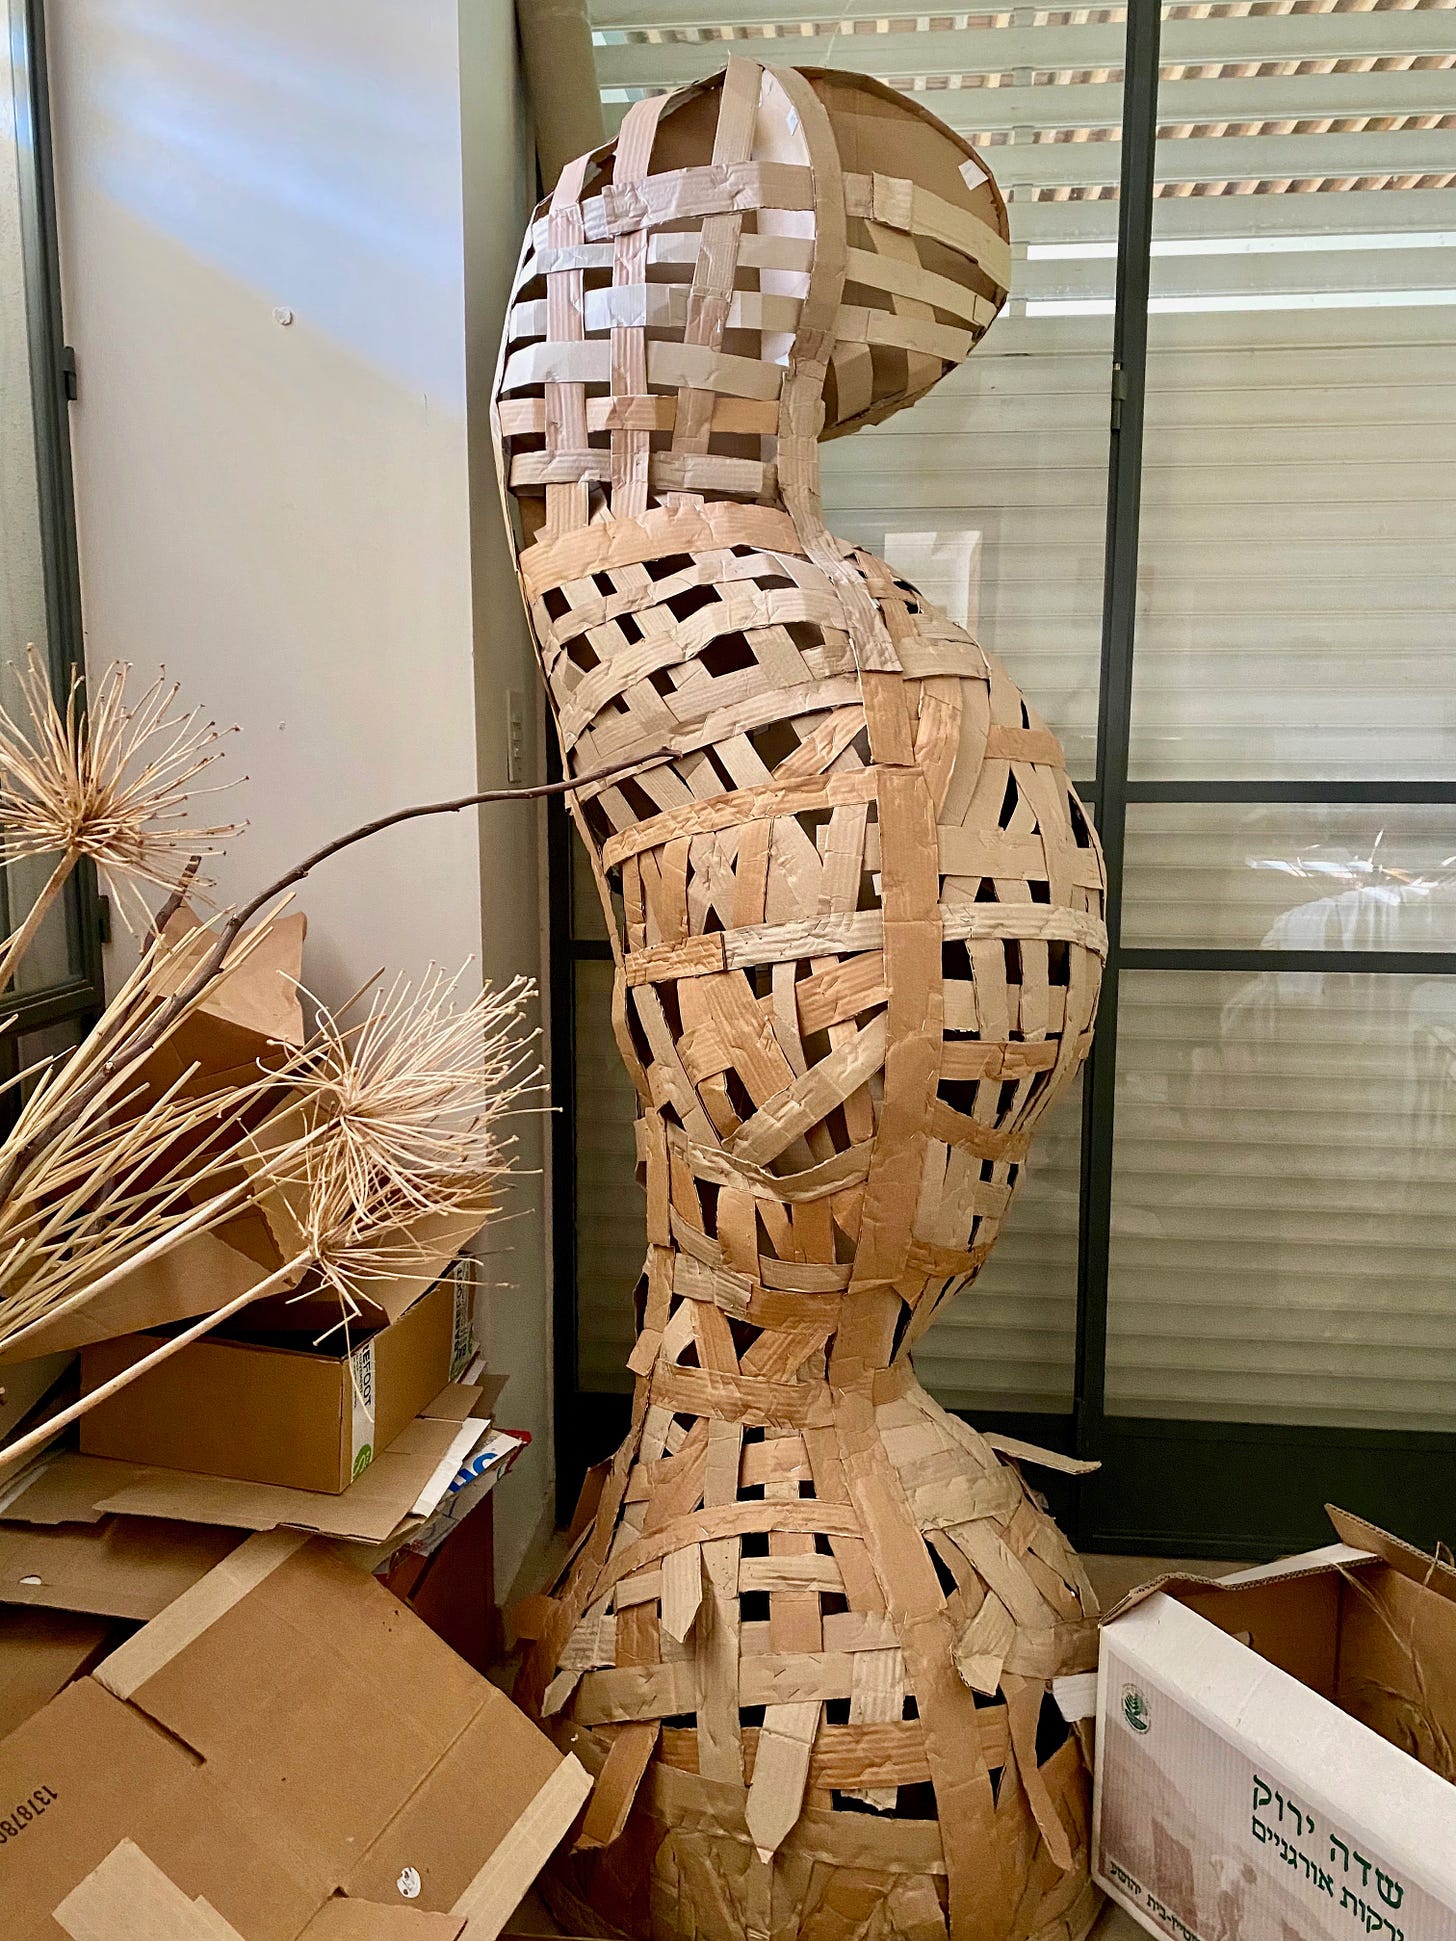 Cardboard sculpture in the making